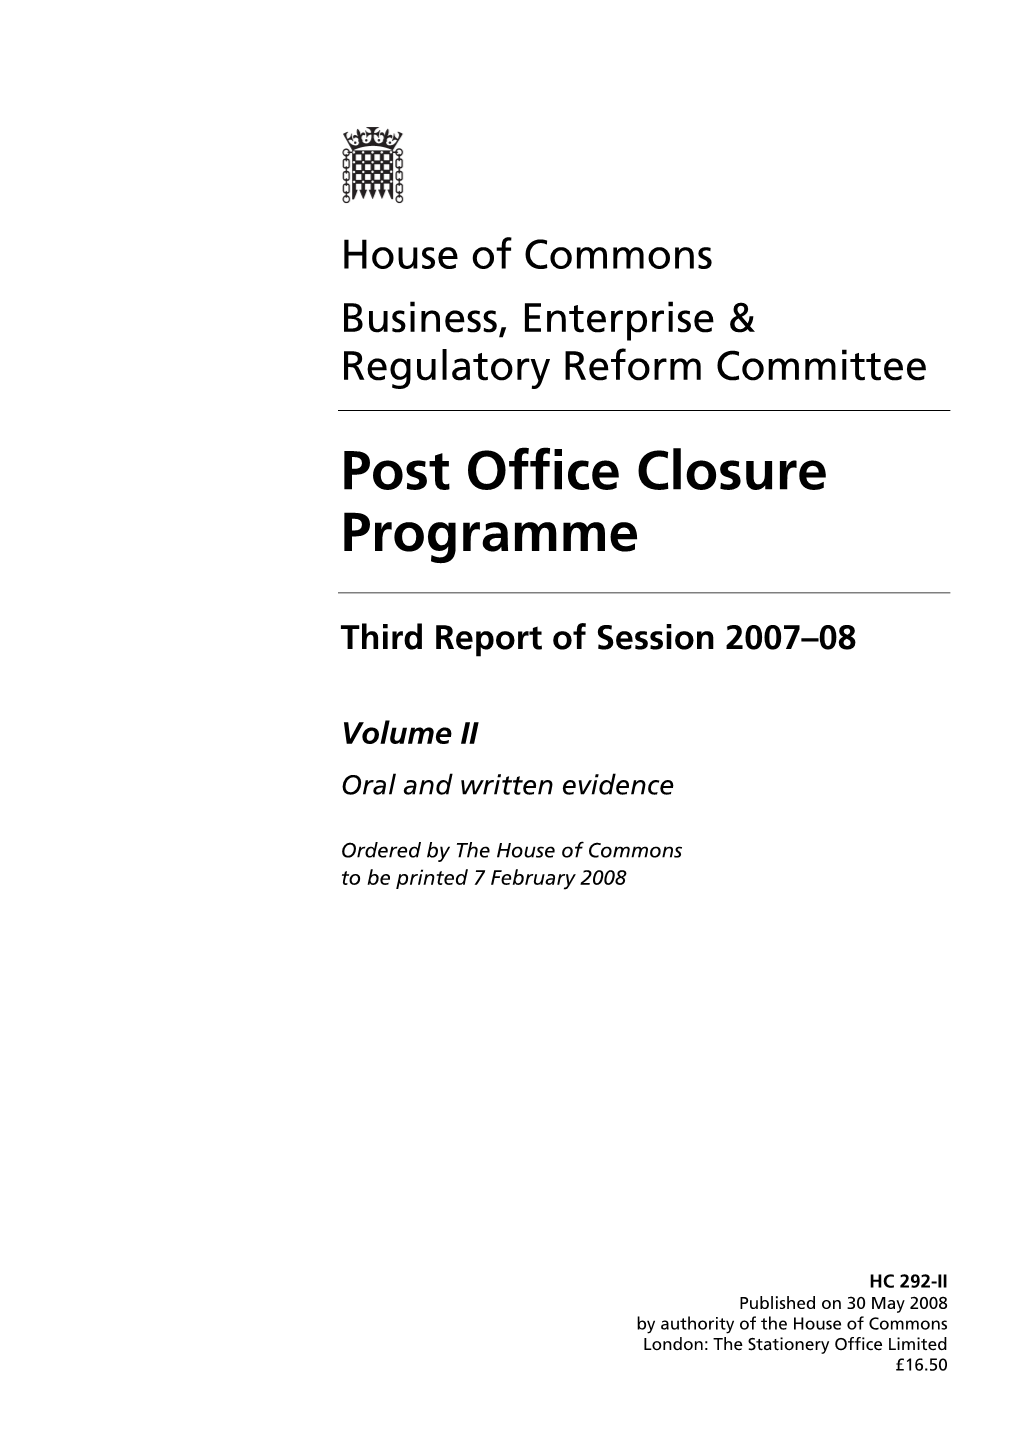 Post Office Closure Programme